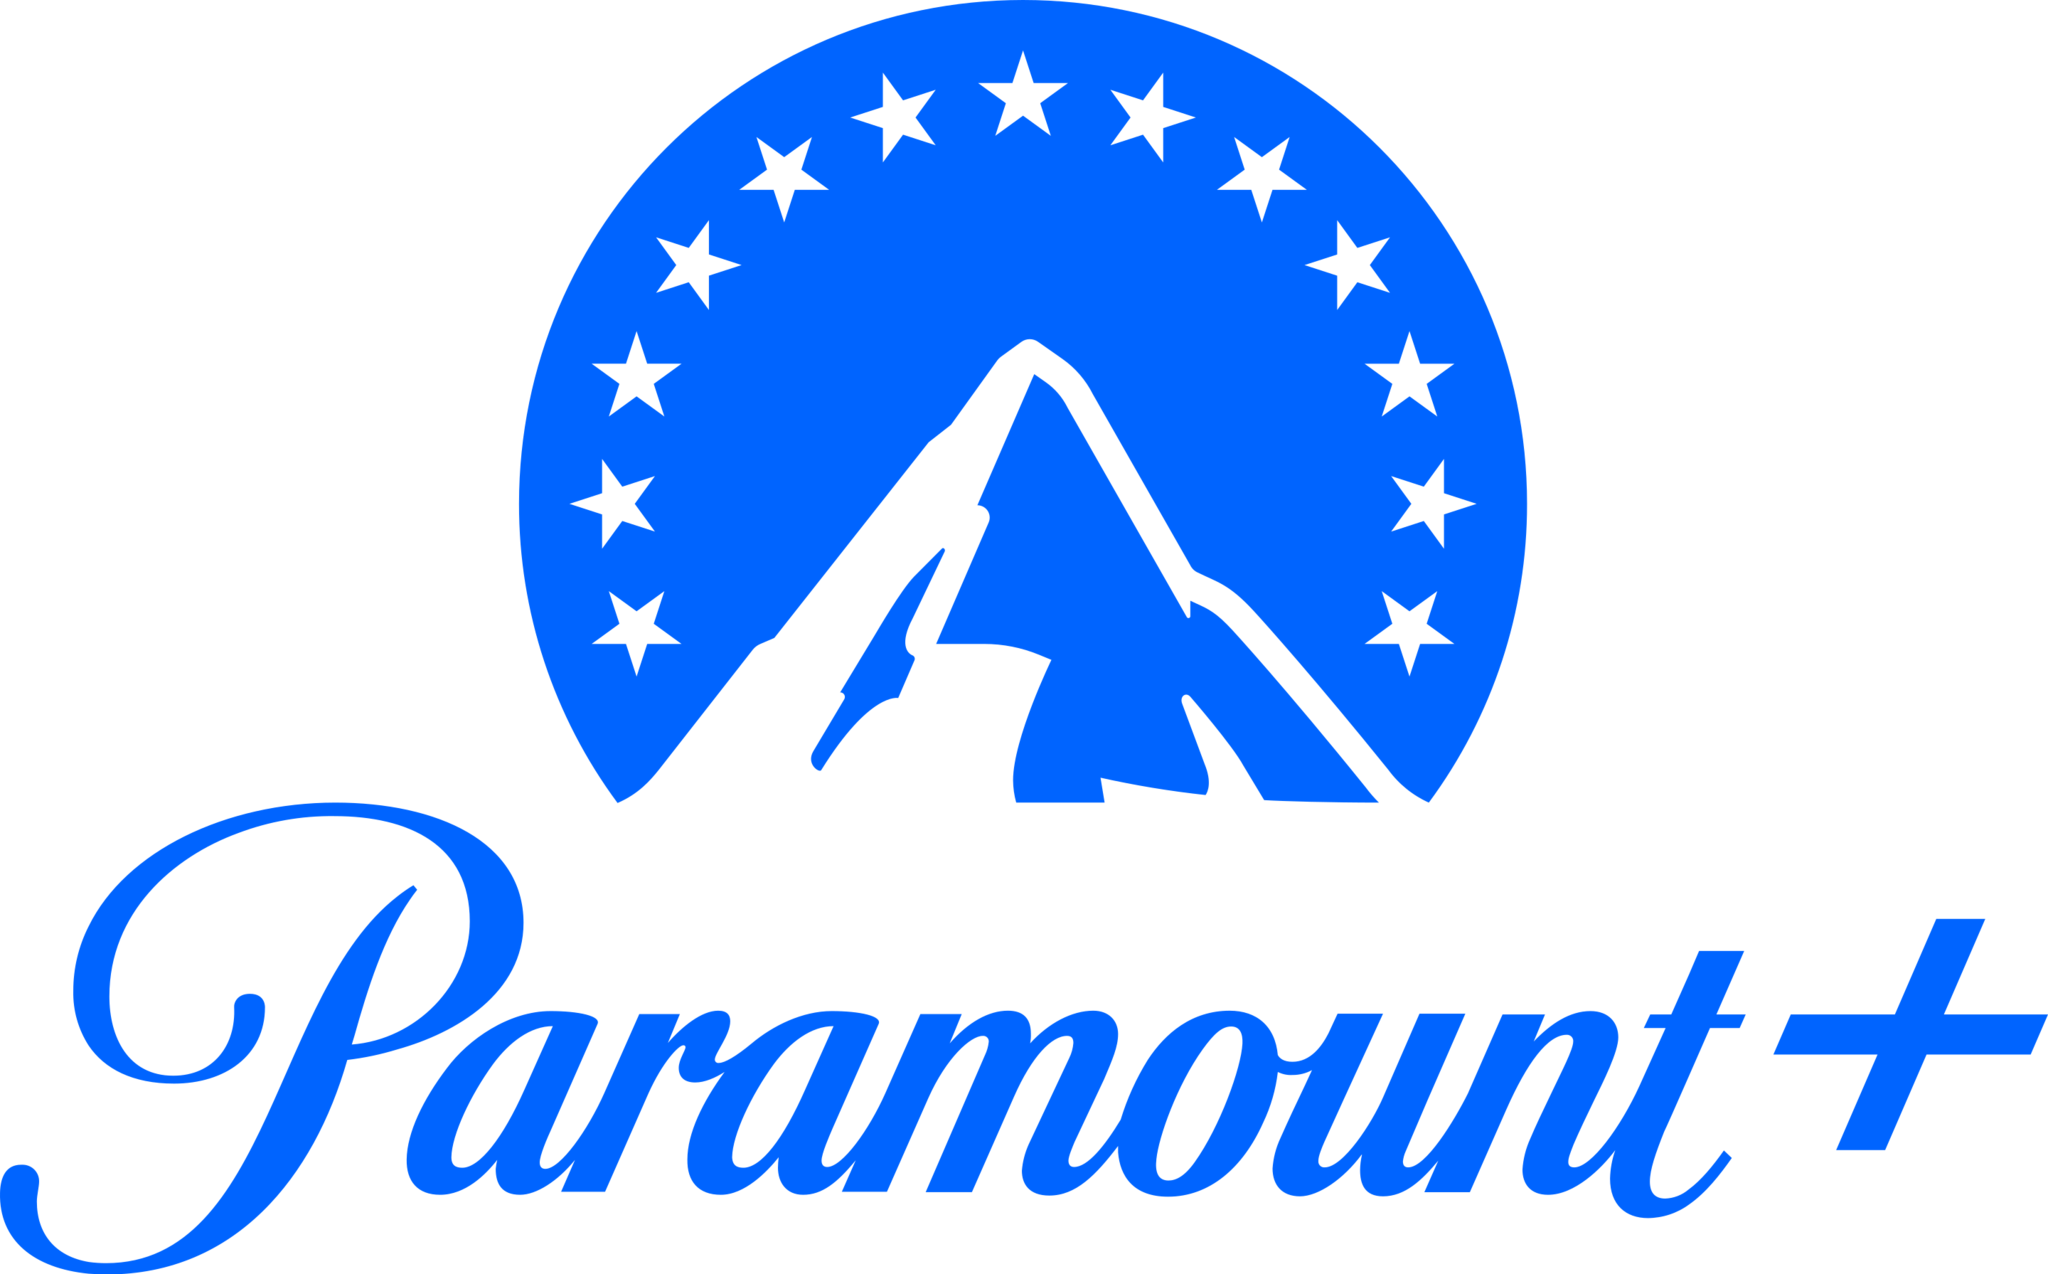 Logotipo da Paramount Plus